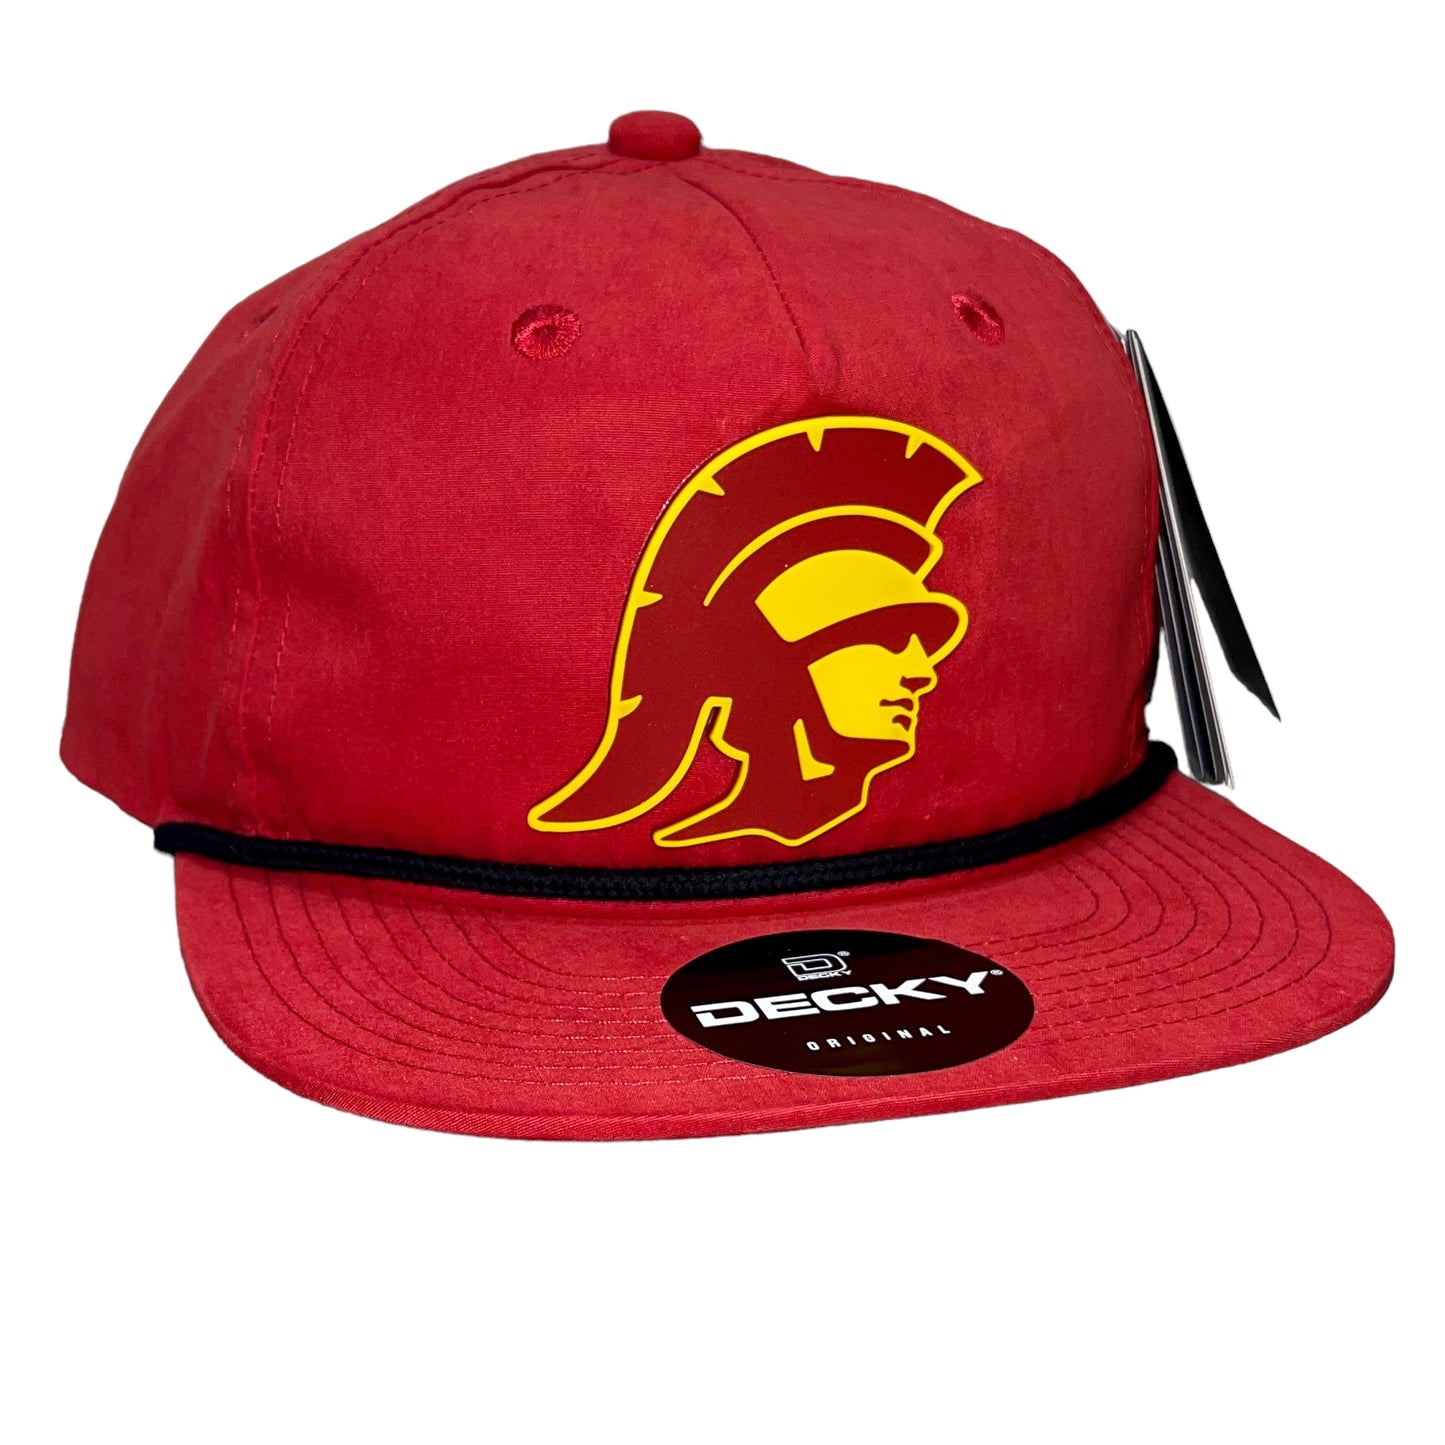 USC Trojans 3D Classic Rope Hat- Red/ Black - Ten Gallon Hat Co.